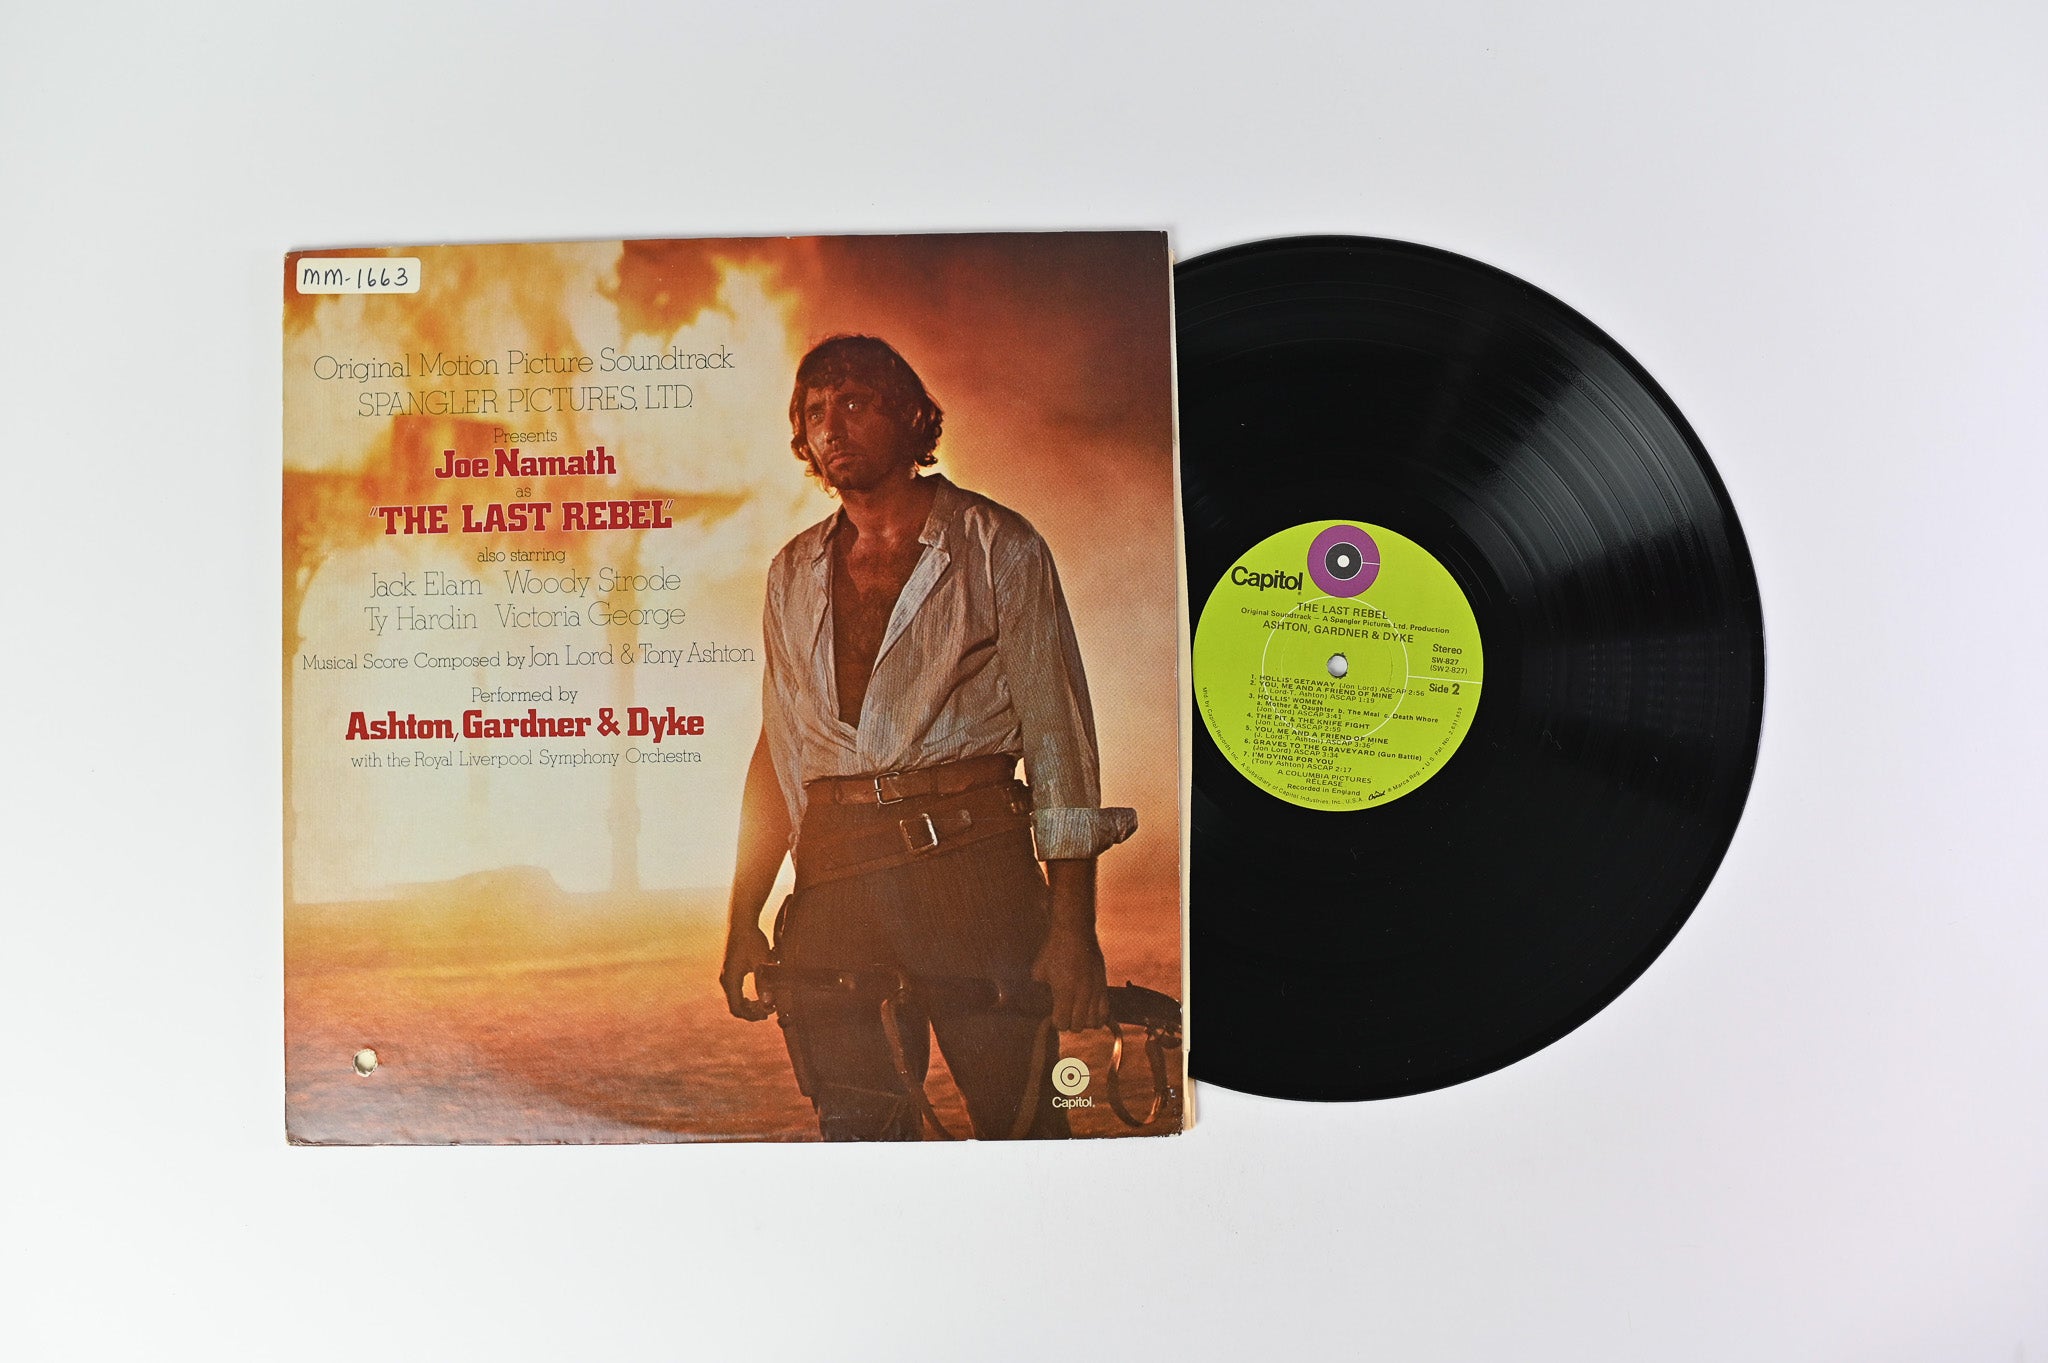 Ashton, Gardner & Dyke - The Last Rebel (Original Motion Picture Soundtrack) on Capitol Records